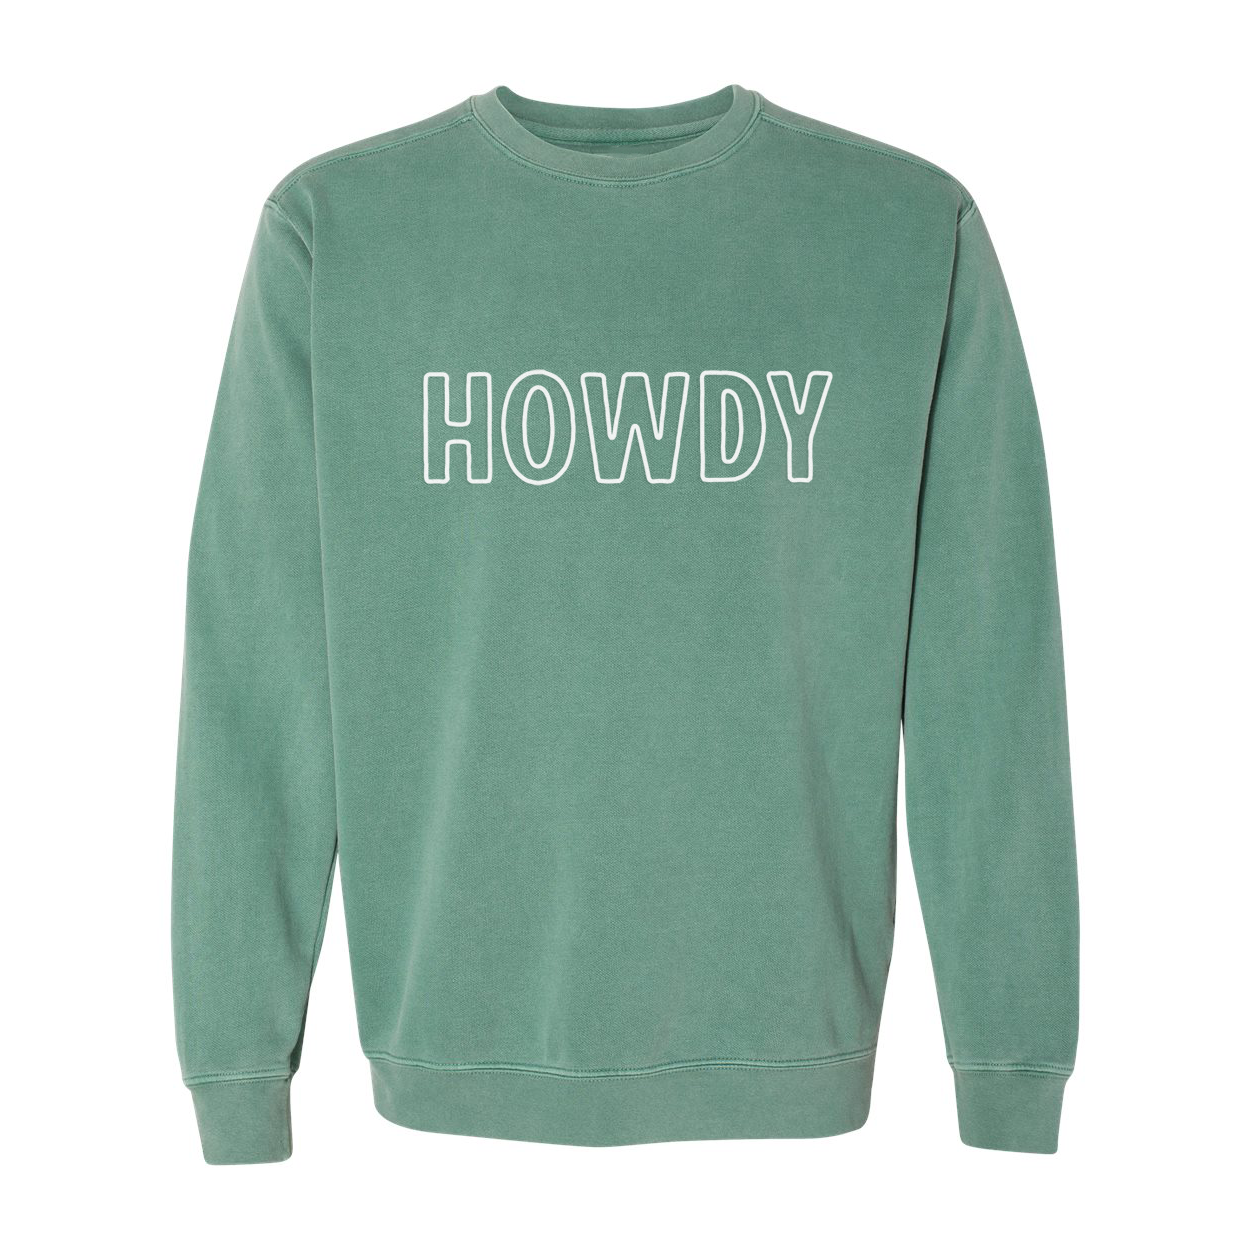 Howdy Outline Washed Sweatshirt